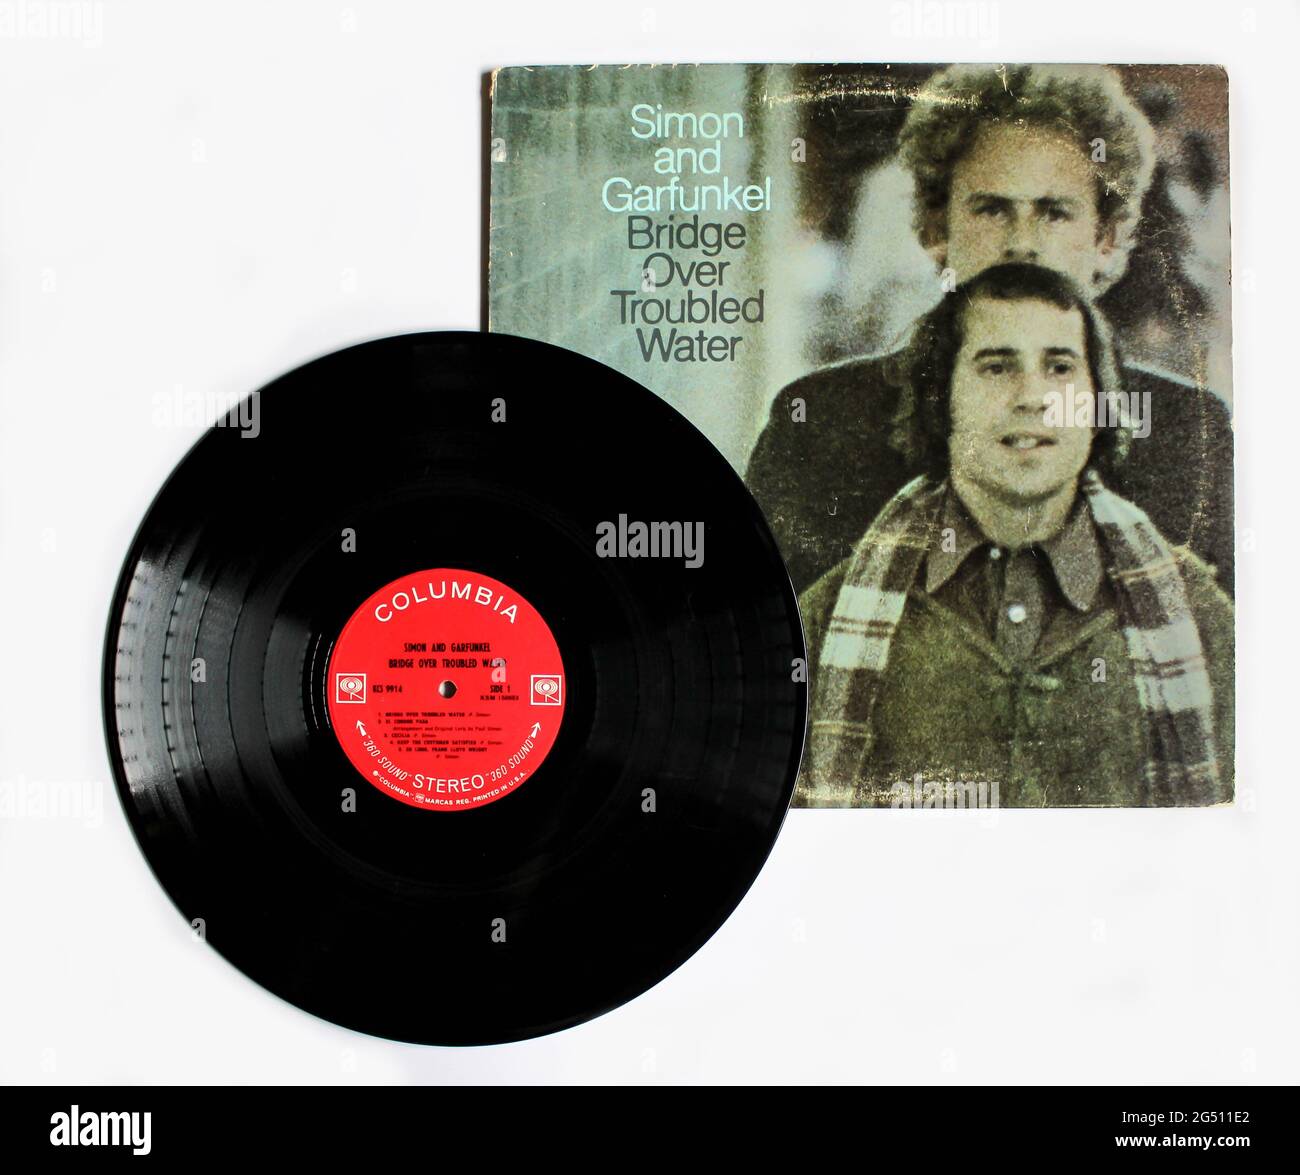 Folk rock singers Simon and Garfunkel music album on vinyl record LP disc.  Titled Bridge over troubled water. Paul Simon and Art Garfunkel album cover  Stock Photo - Alamy